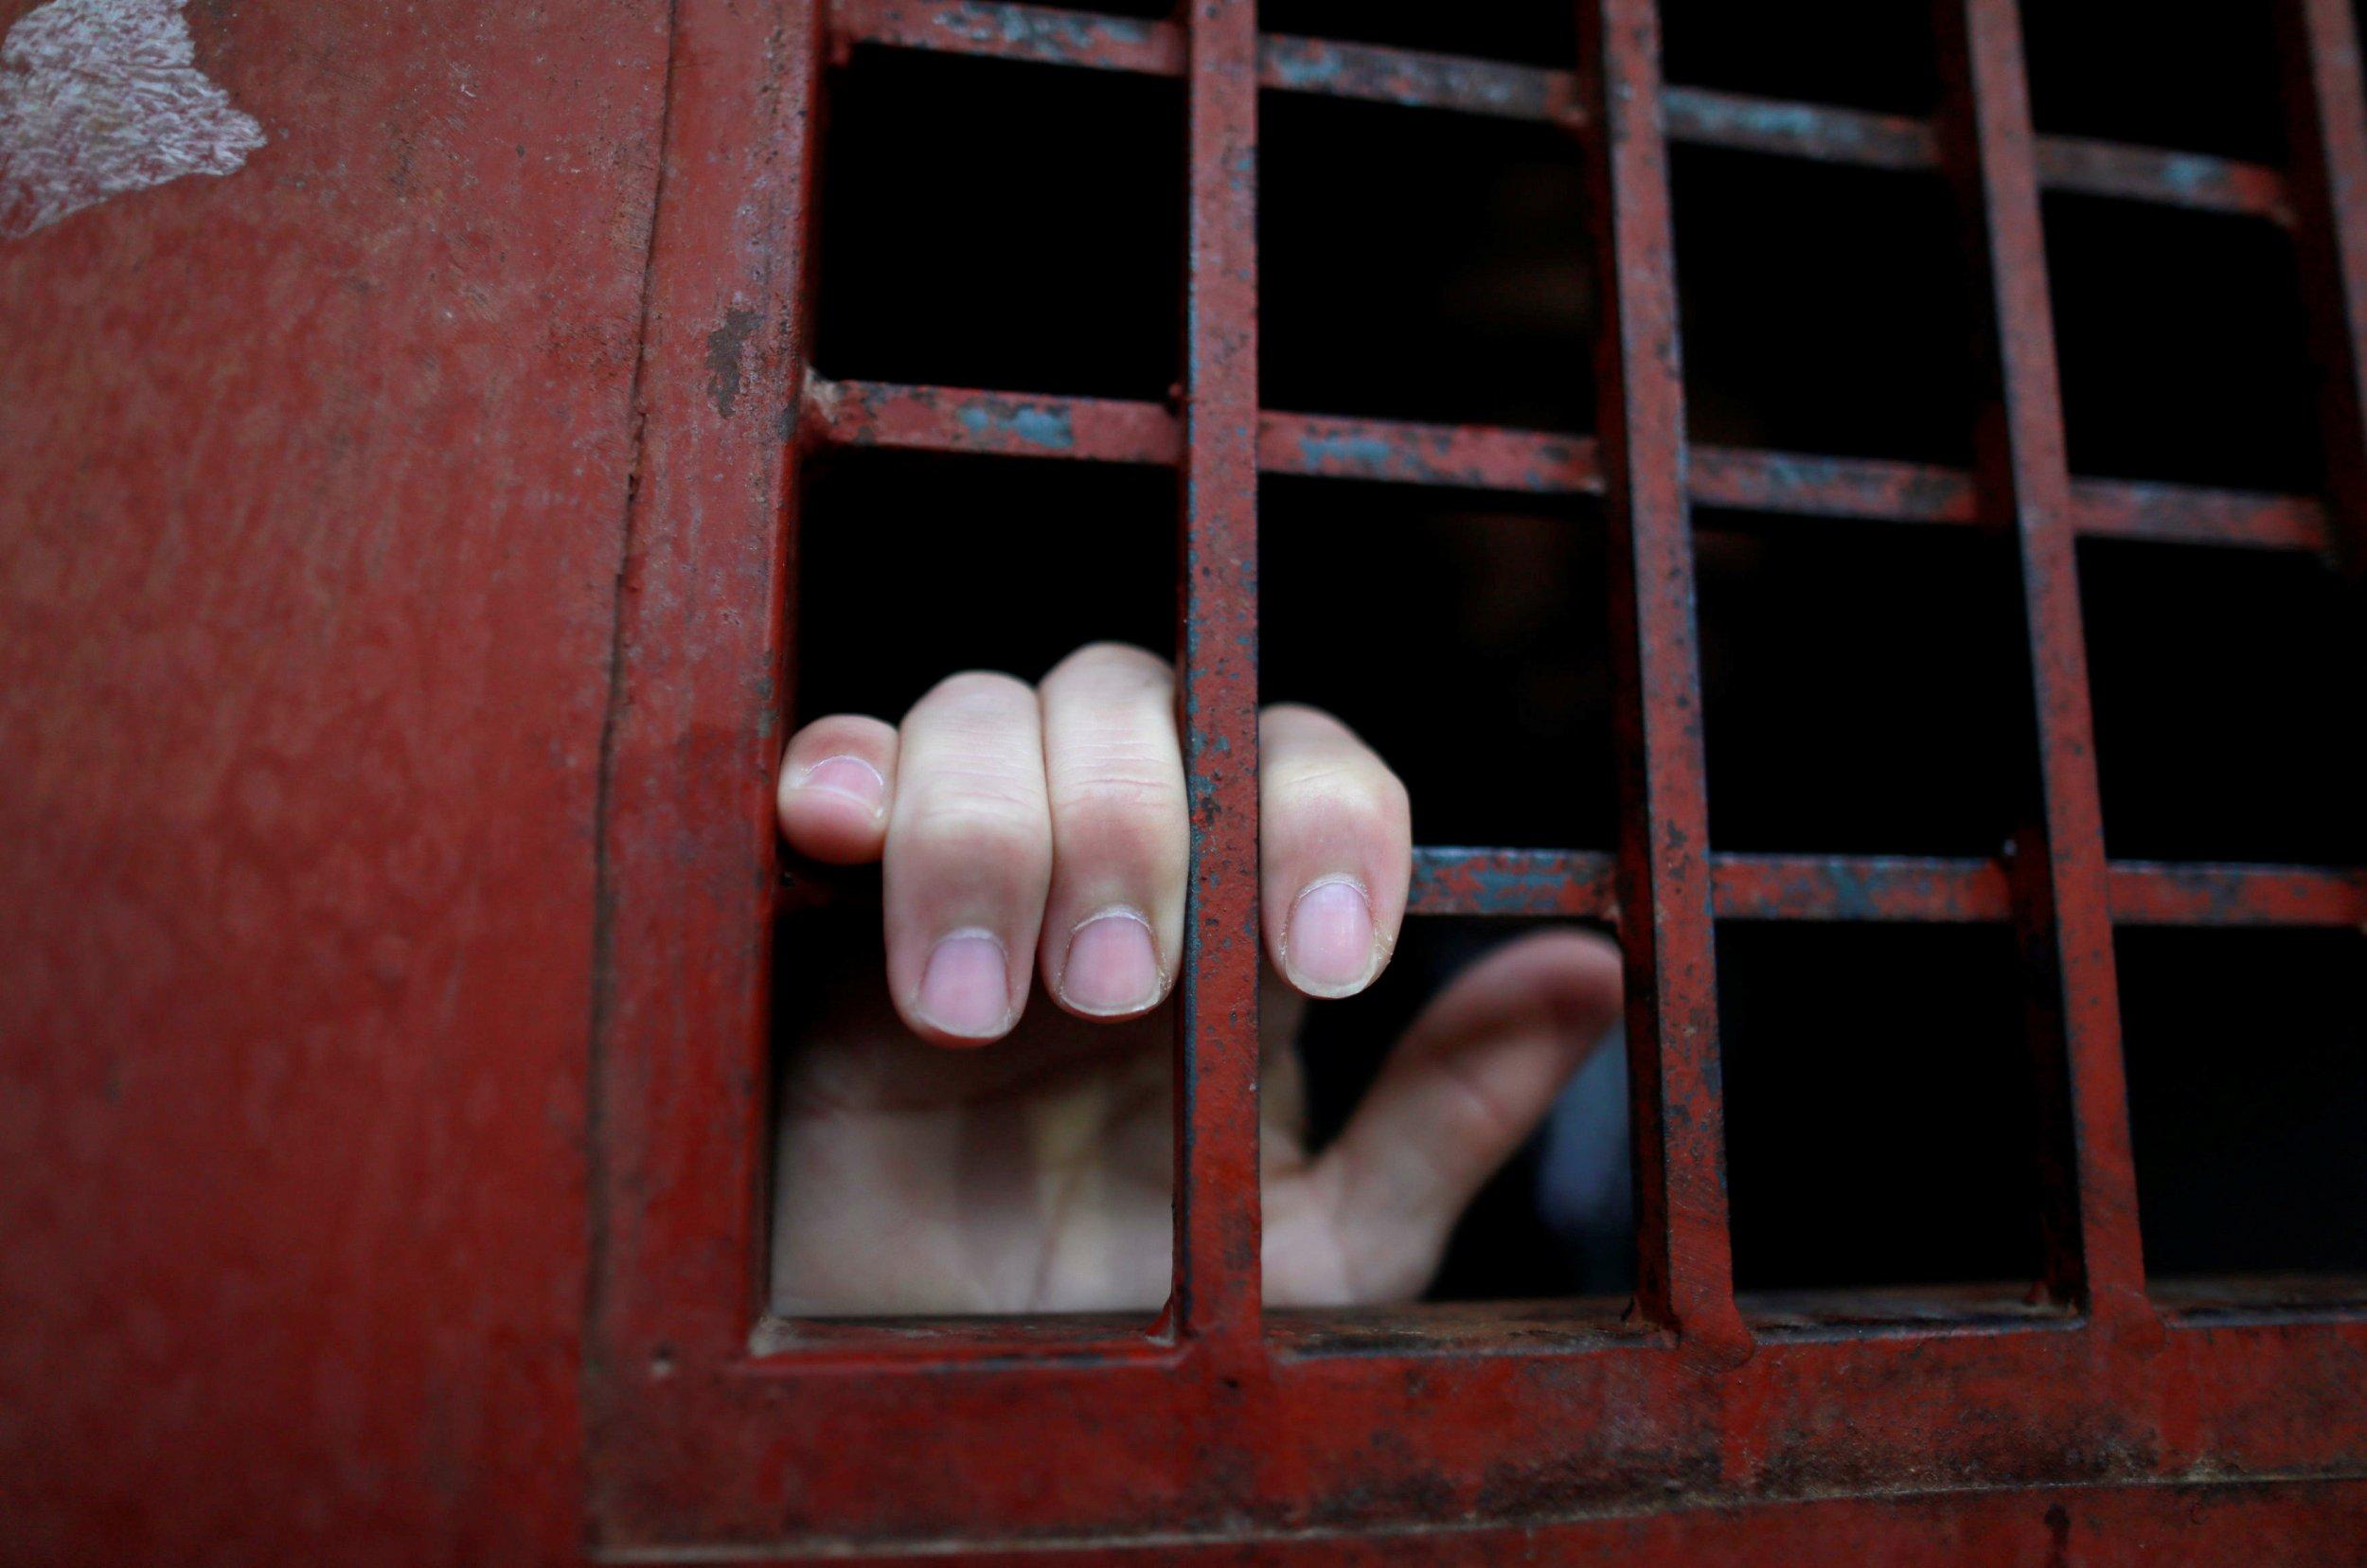 ISIS prisoner hand on jail cell bars